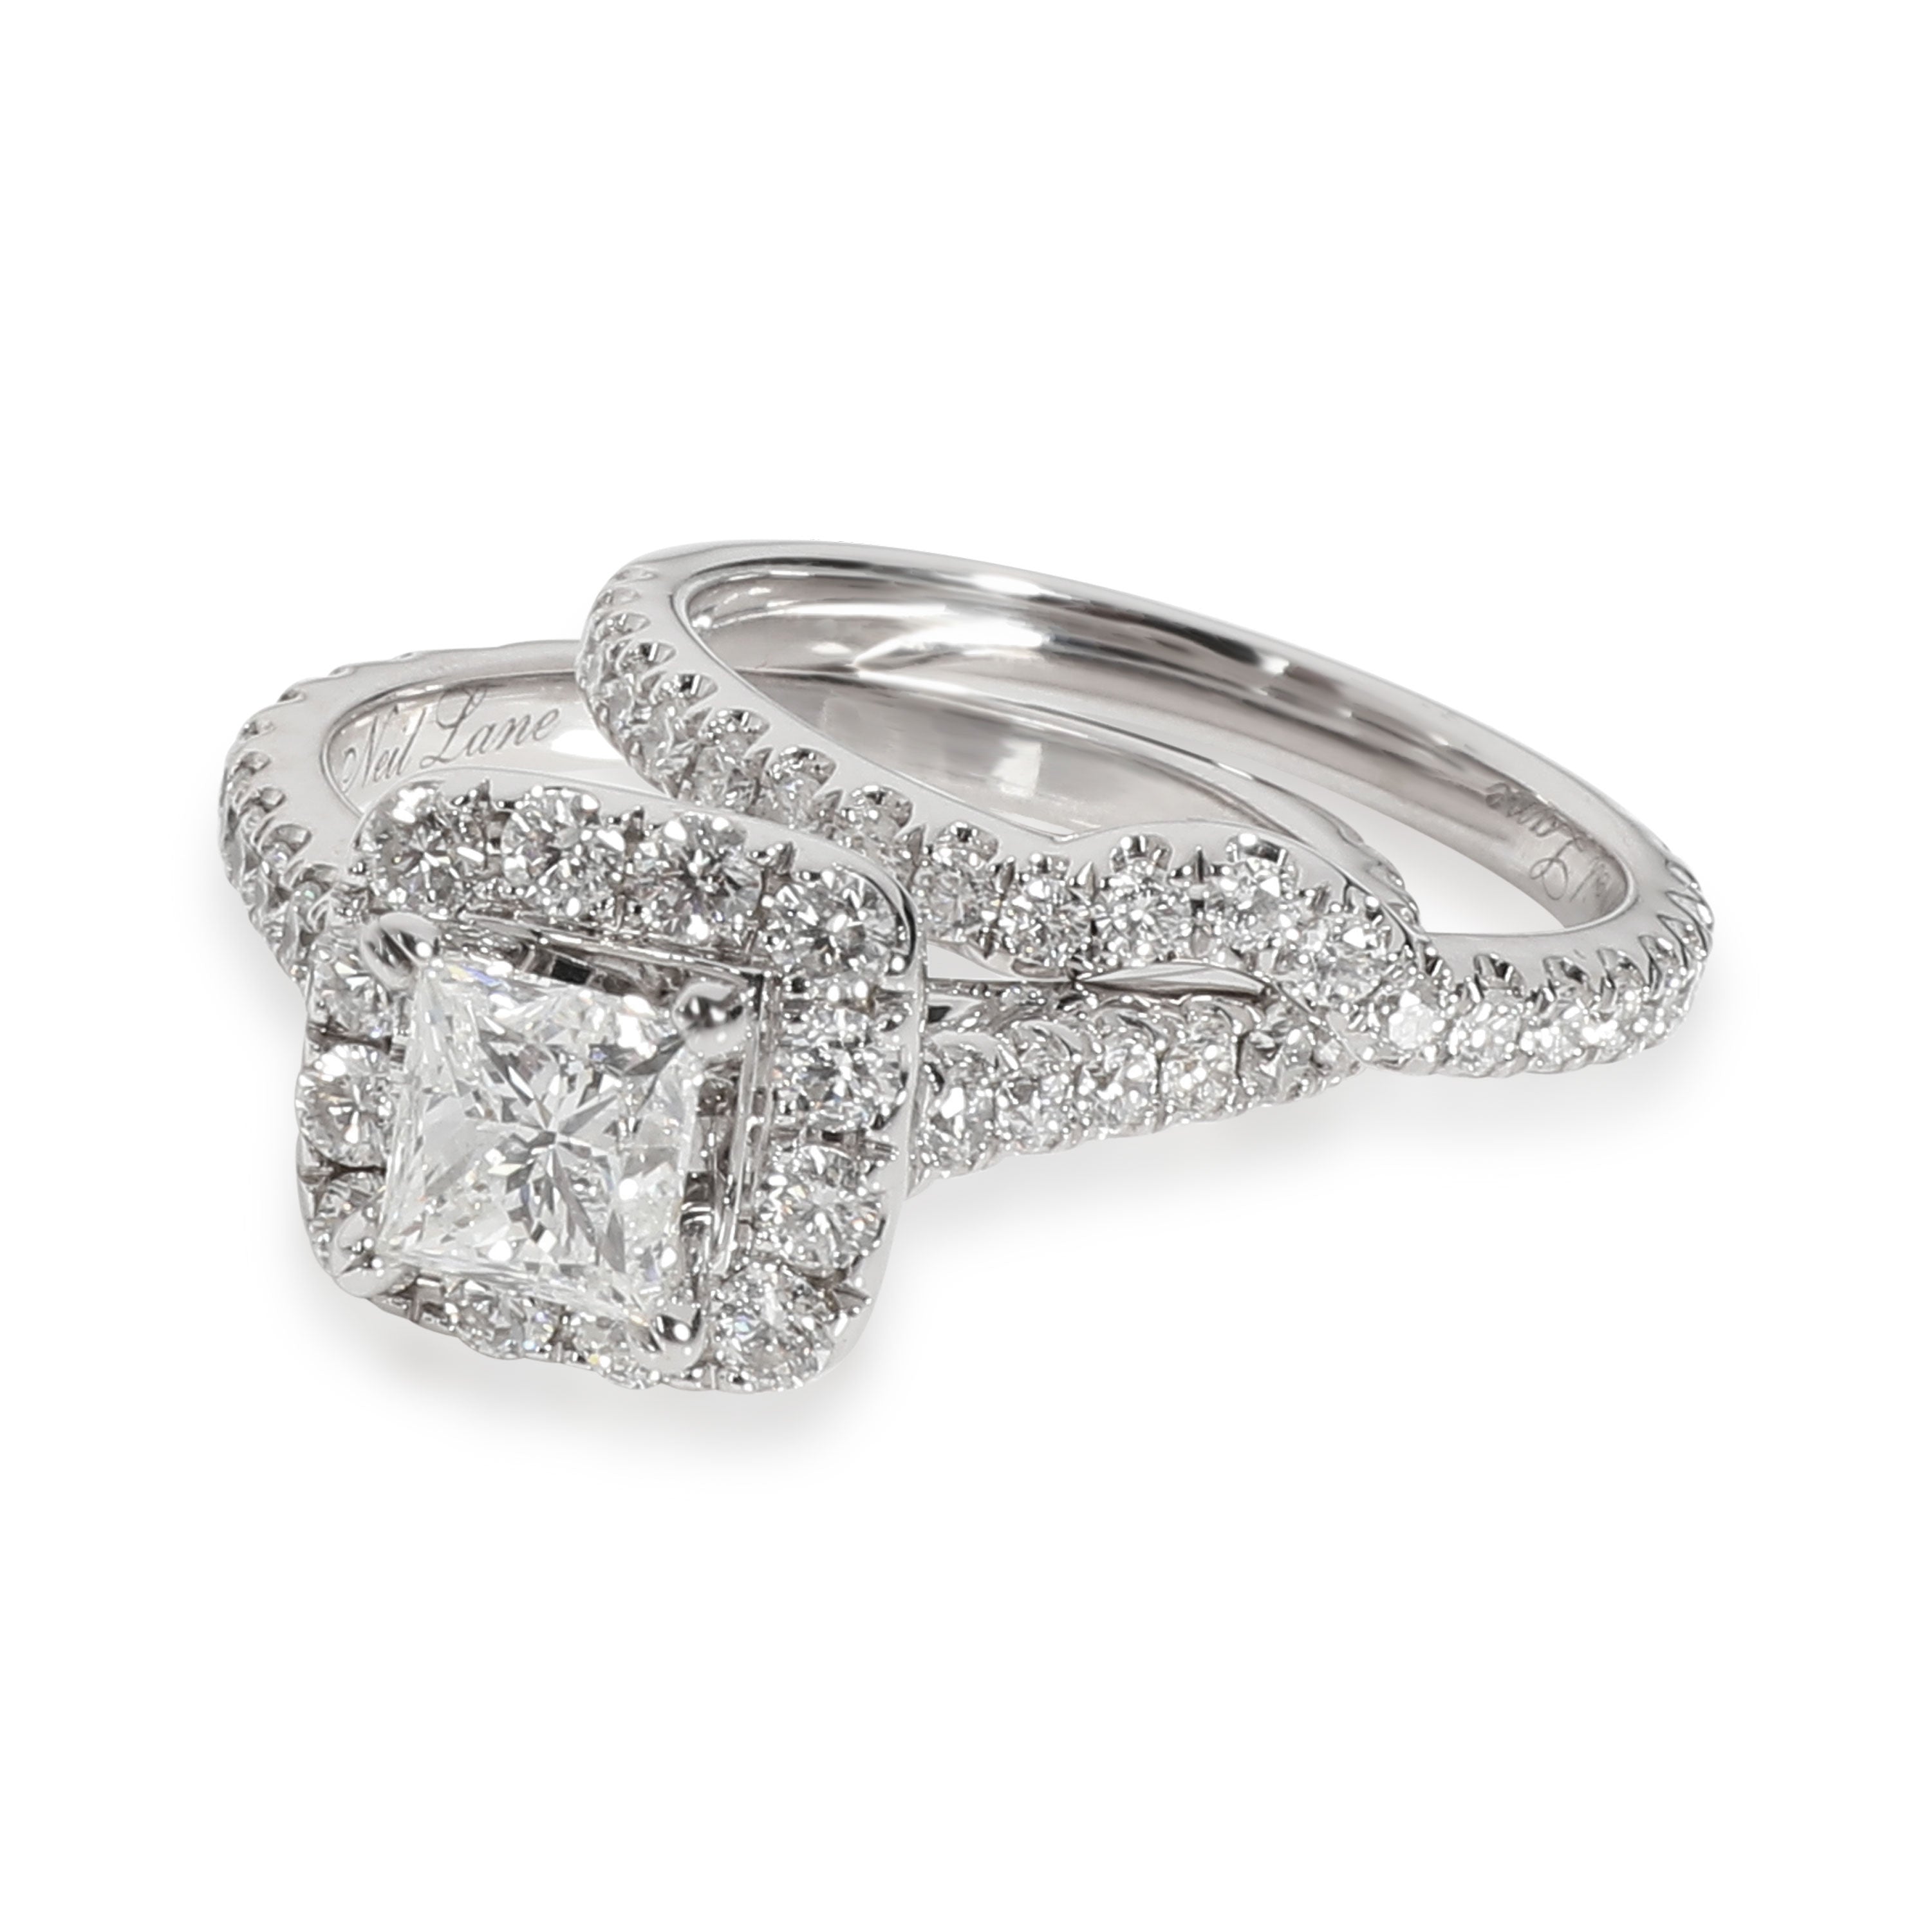 Louis Vuitton - Monogram Infini Engagement Ring White Gold and Diamond - Grey - Unisex - Size: 51 - Luxury